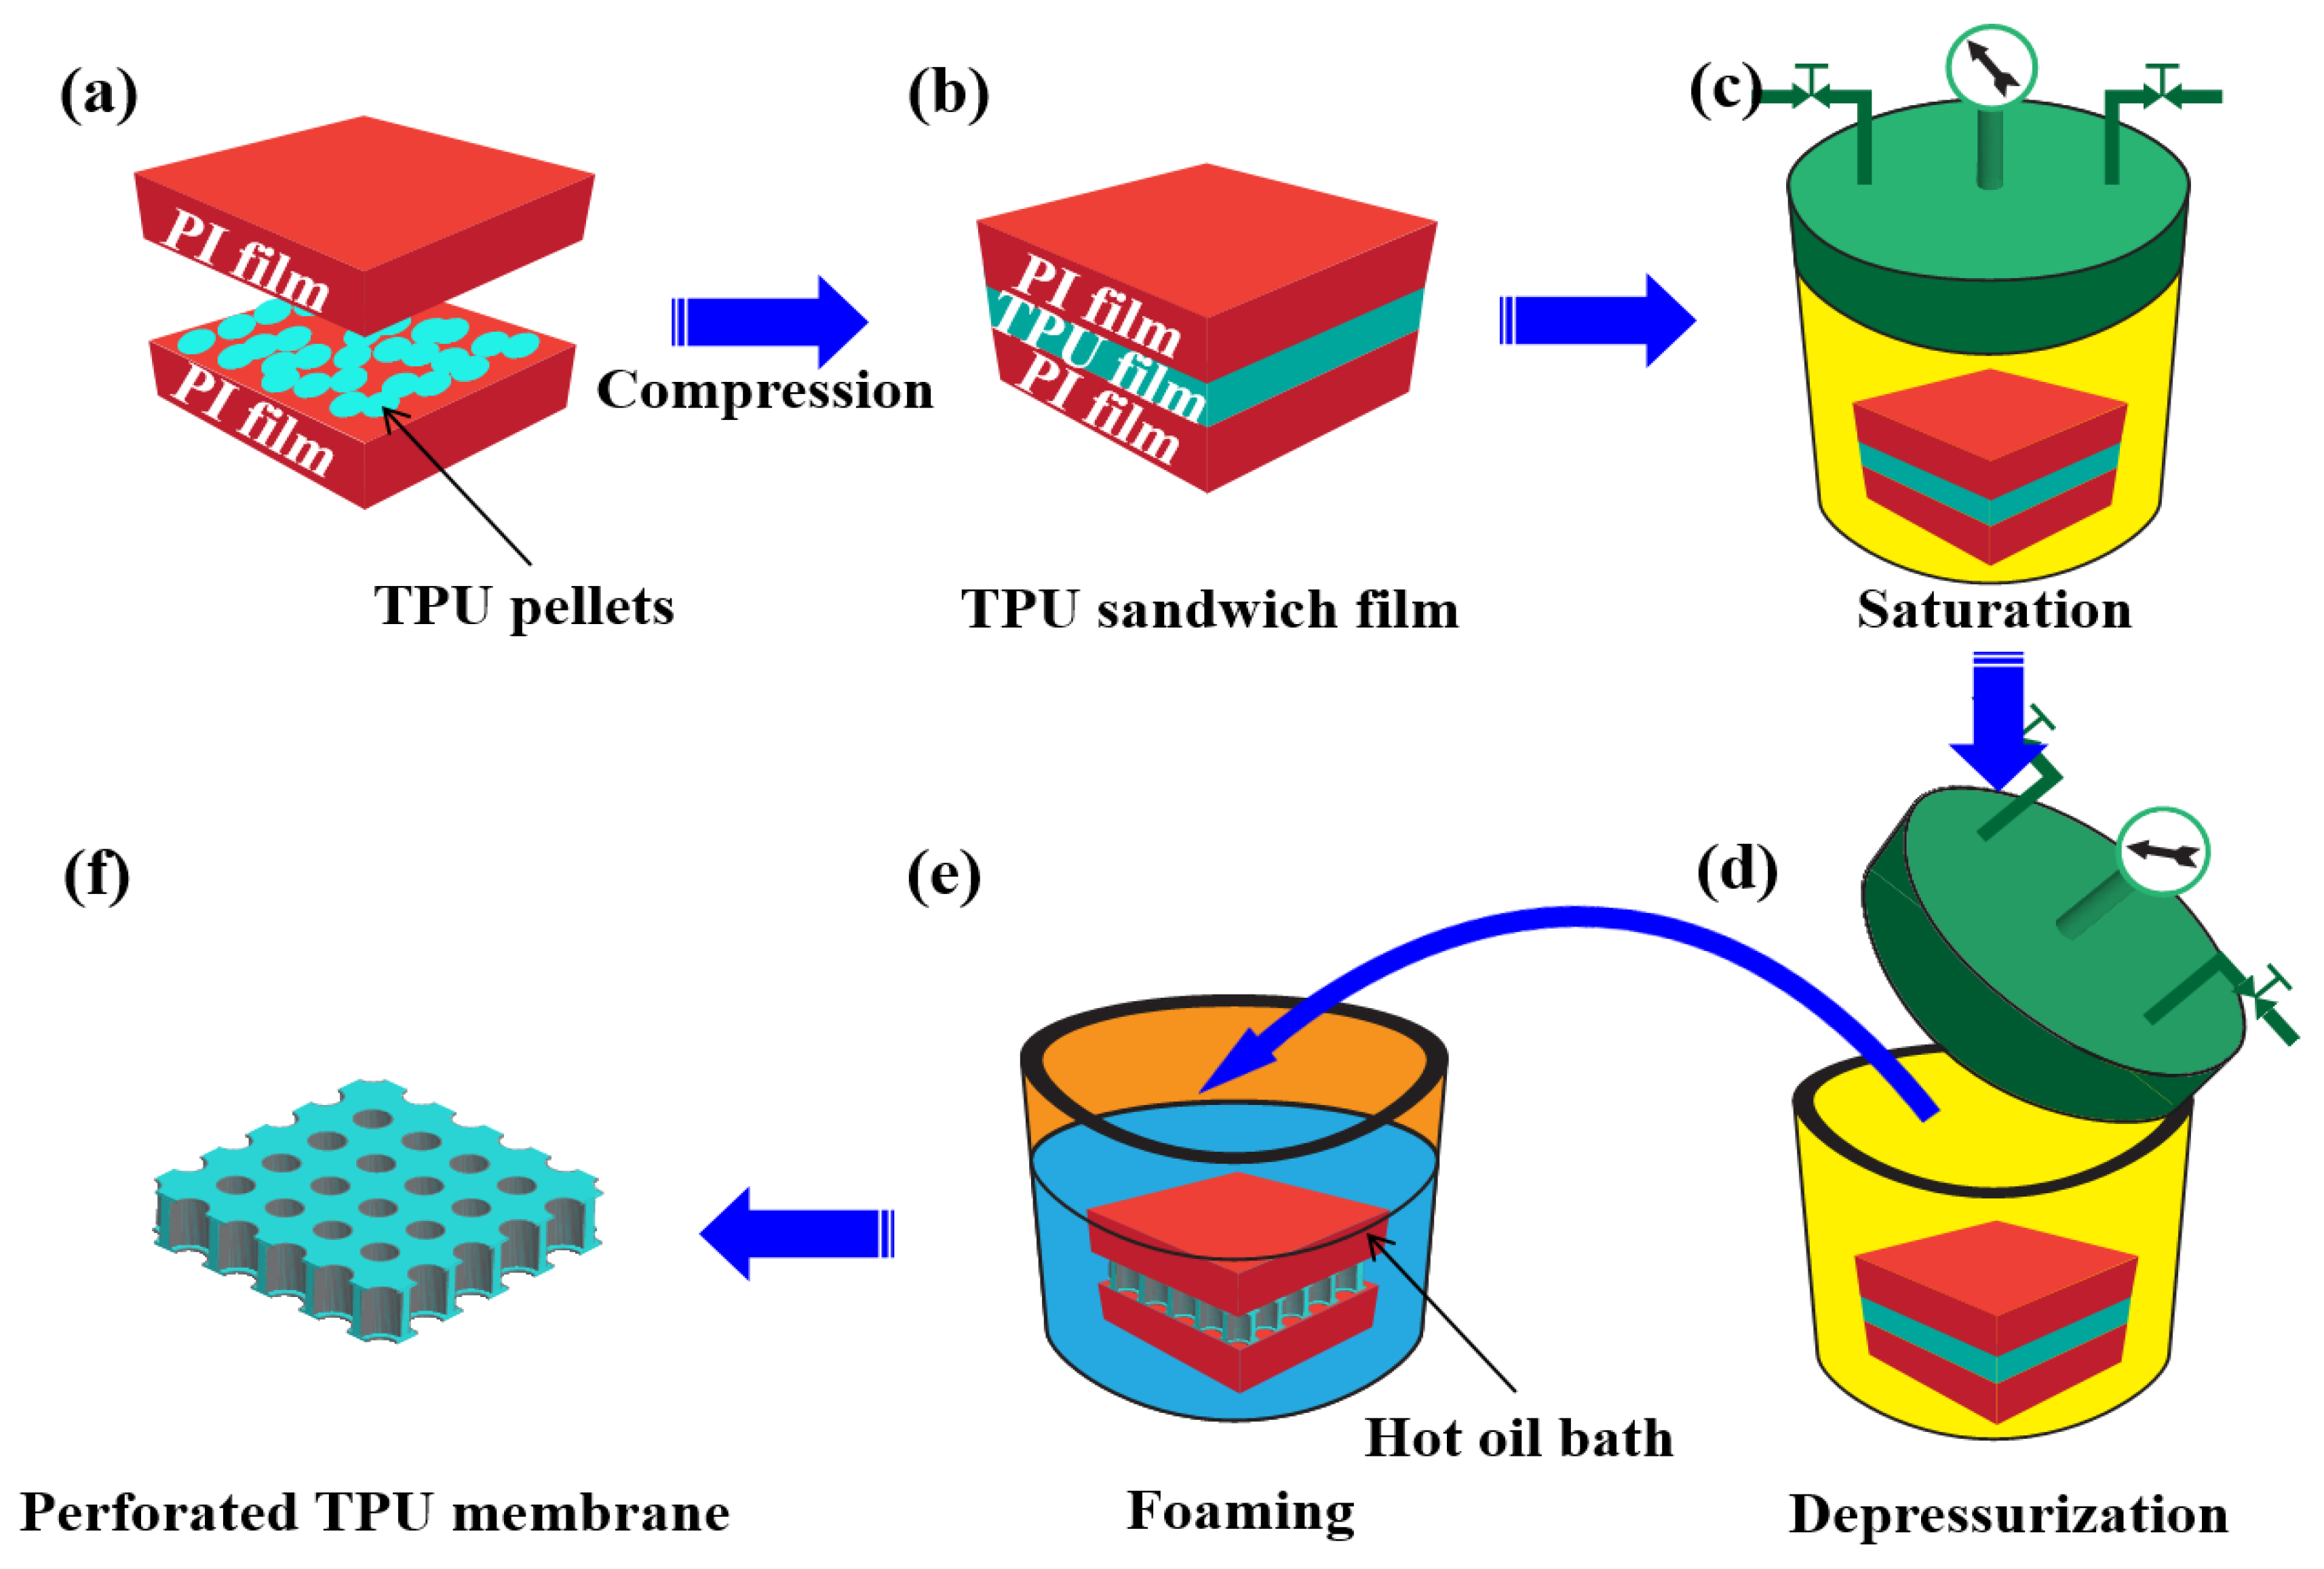 Thermoplastic Polyurethane (TPU) Film Manufacturer